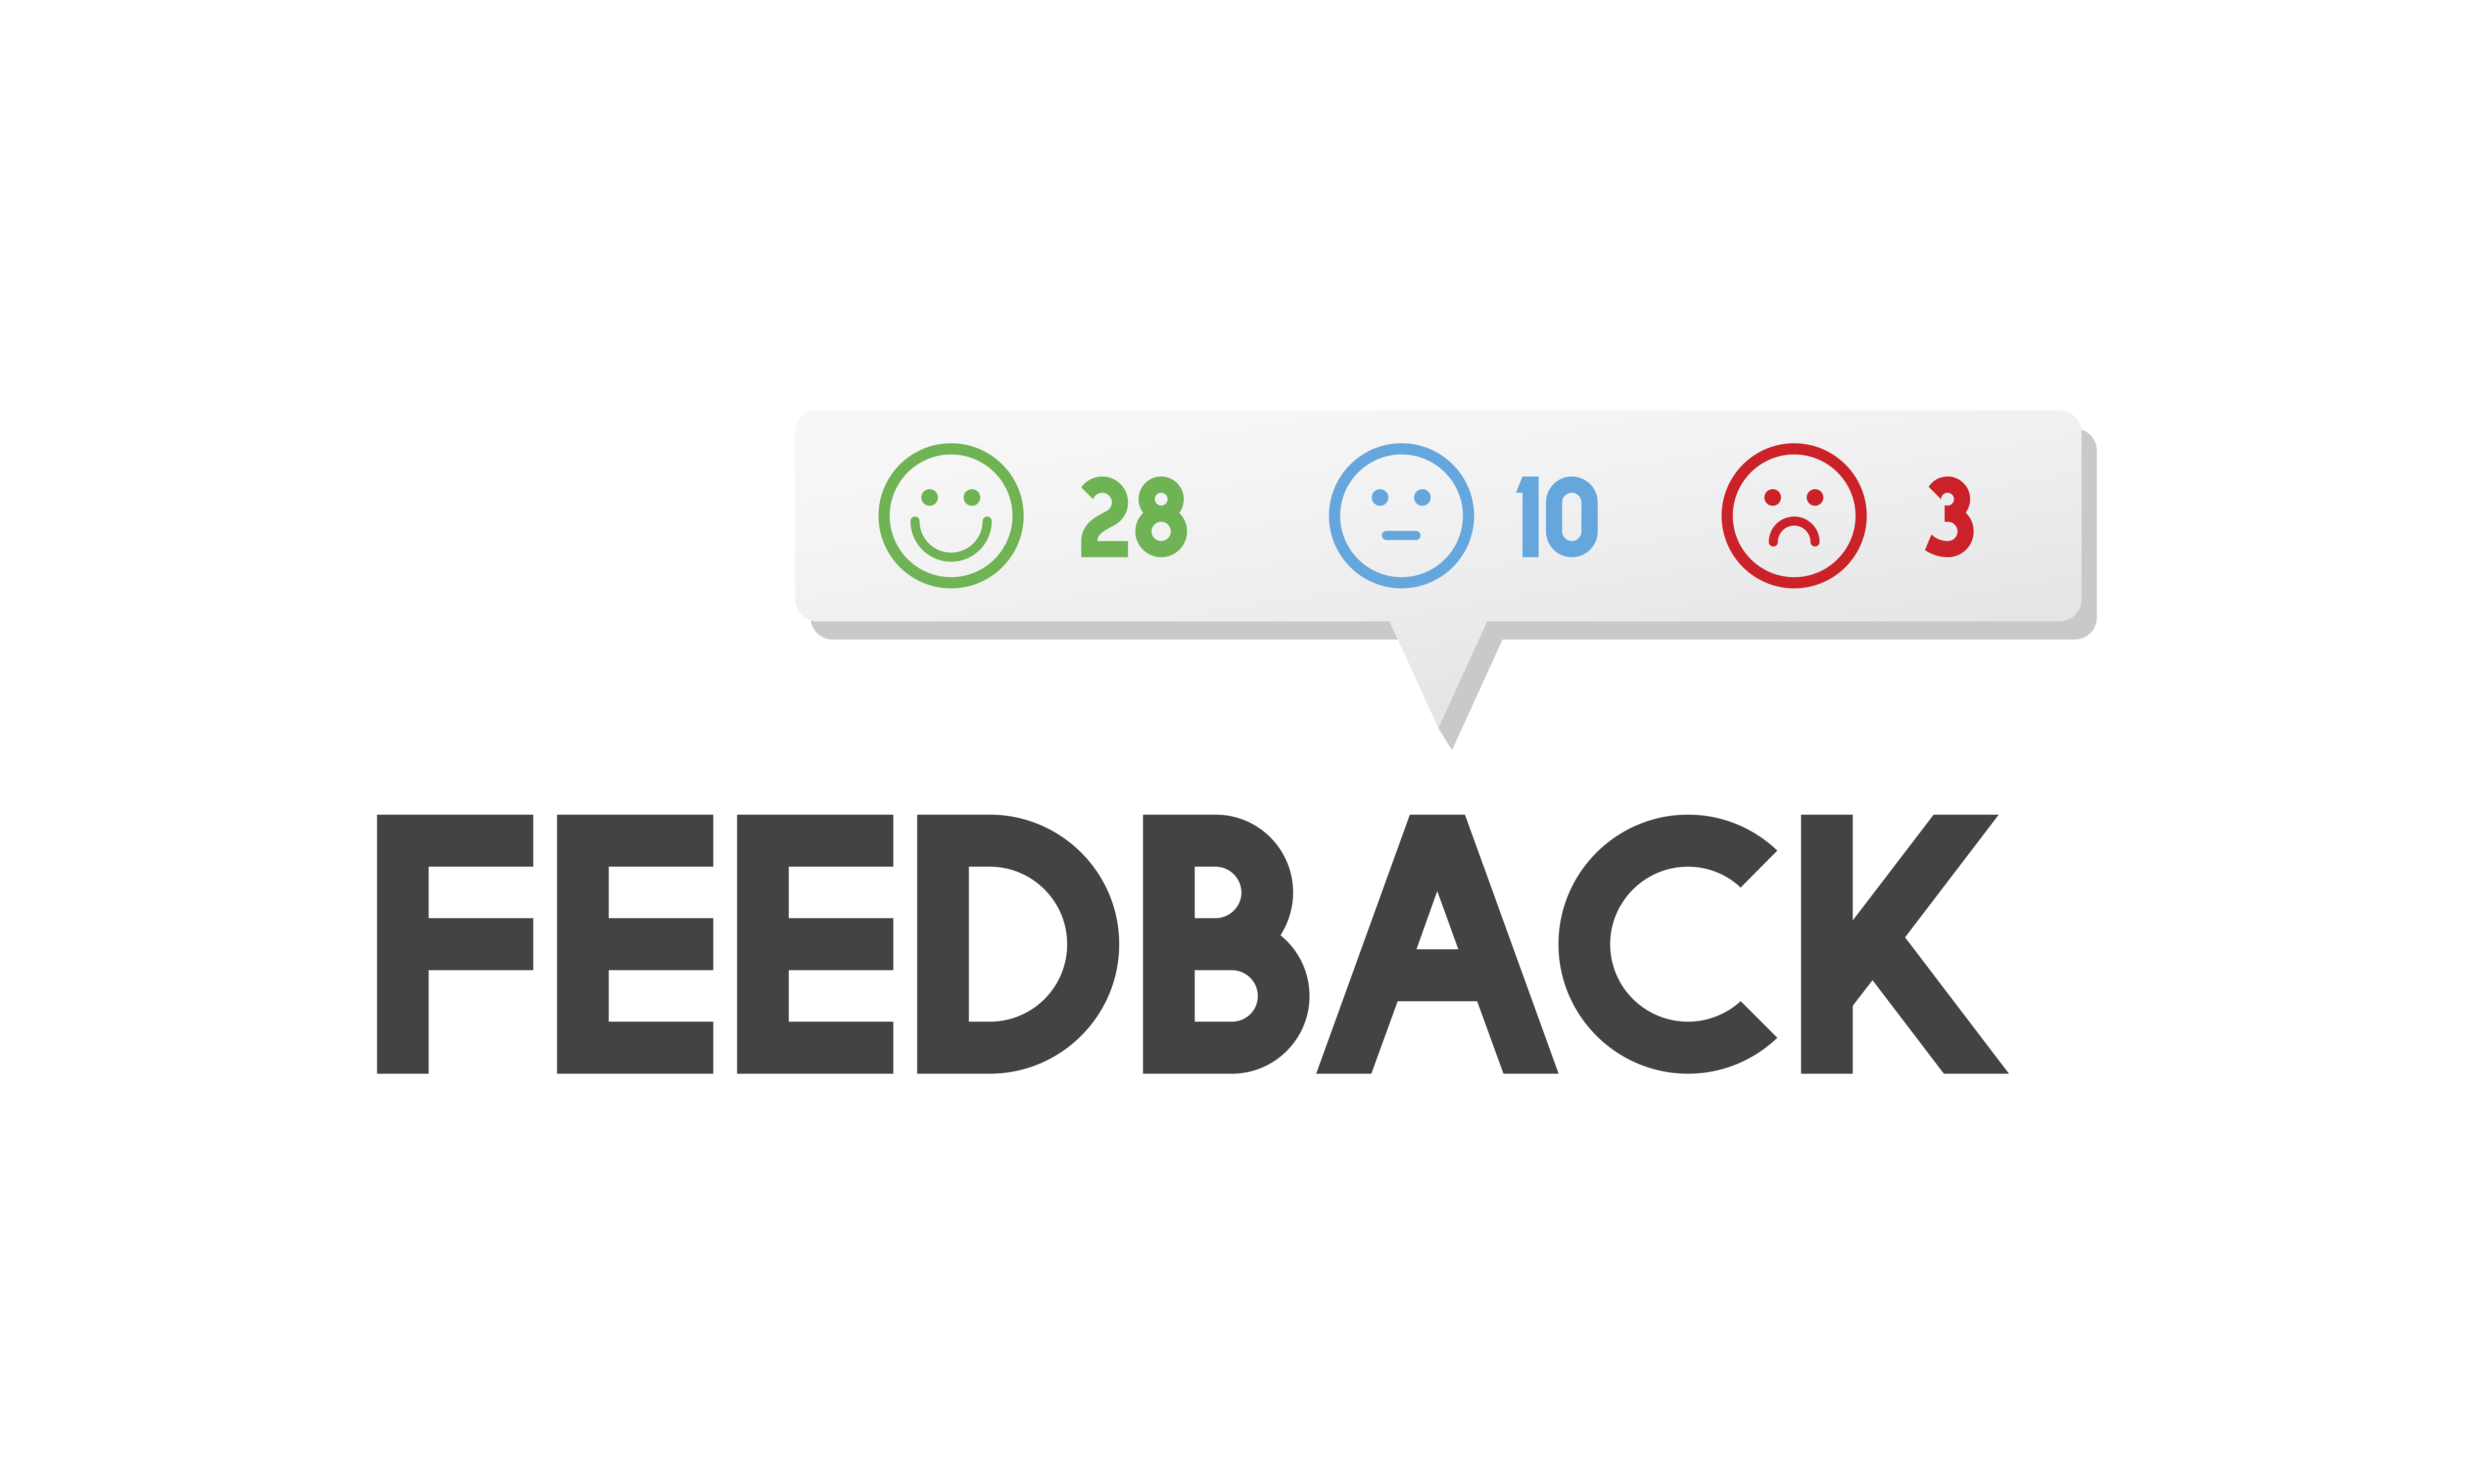 Search connect. Фидбэк. Обзор картинка. Collect feedback. Feedback Design.